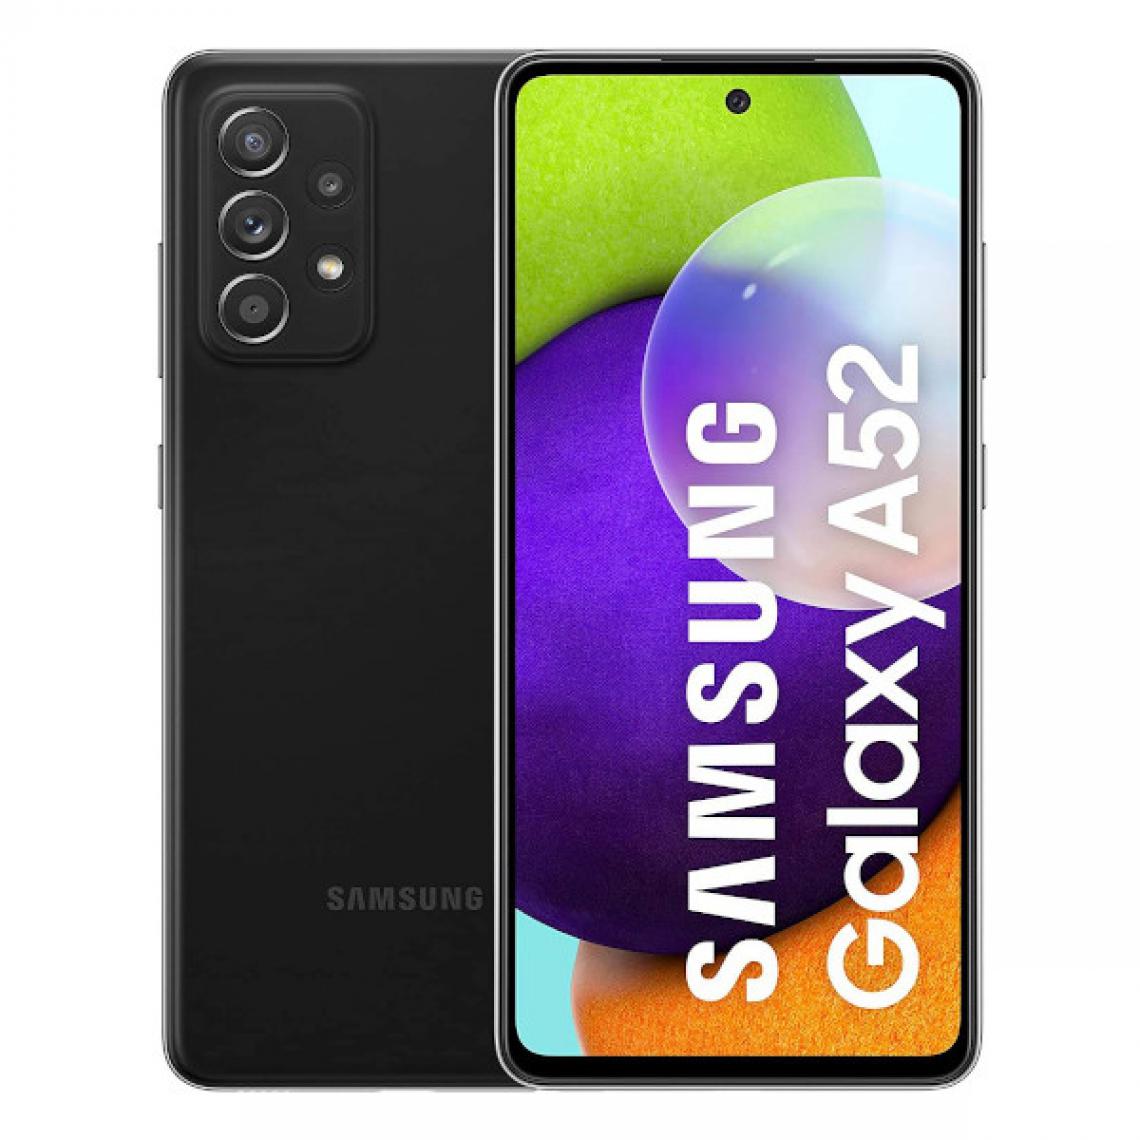 Samsung - Samsung Galaxy A52 6Go/128Go Dual Sim Noir (Awesome Black) - Smartphone Android